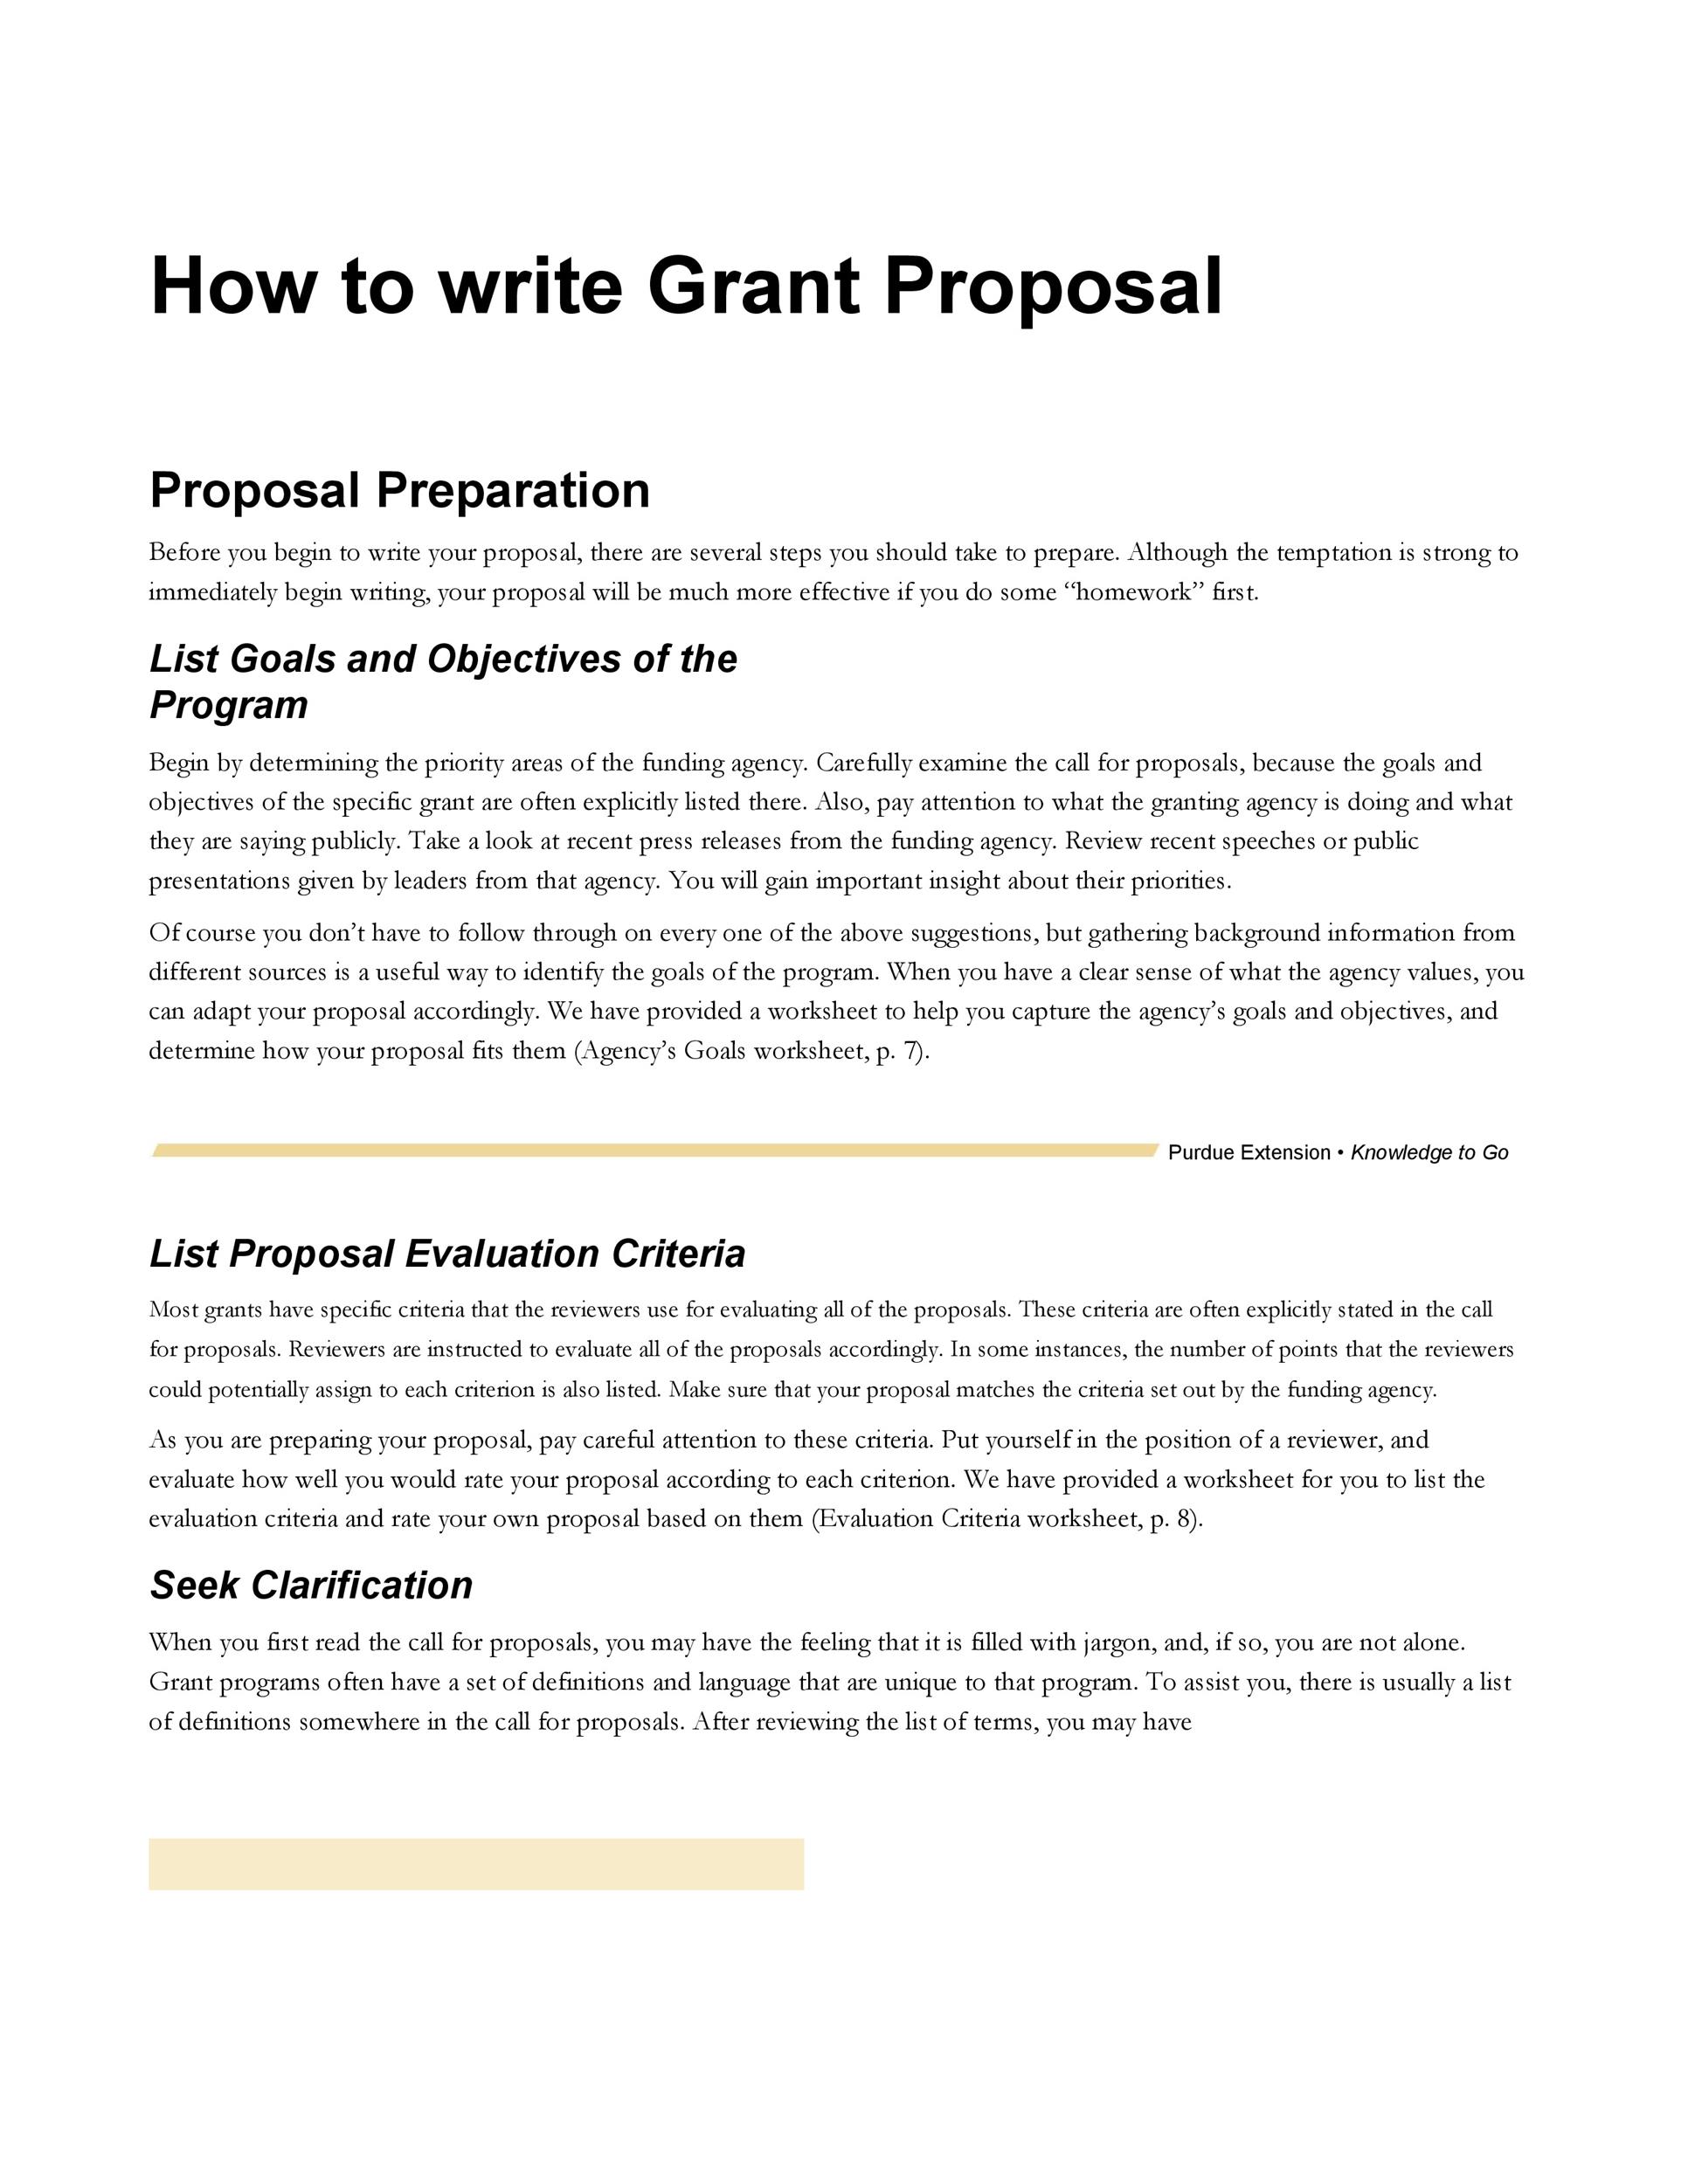 40+ Grant Proposal Templates [NSF, NonProfit, Research] ᐅ TemplateLab